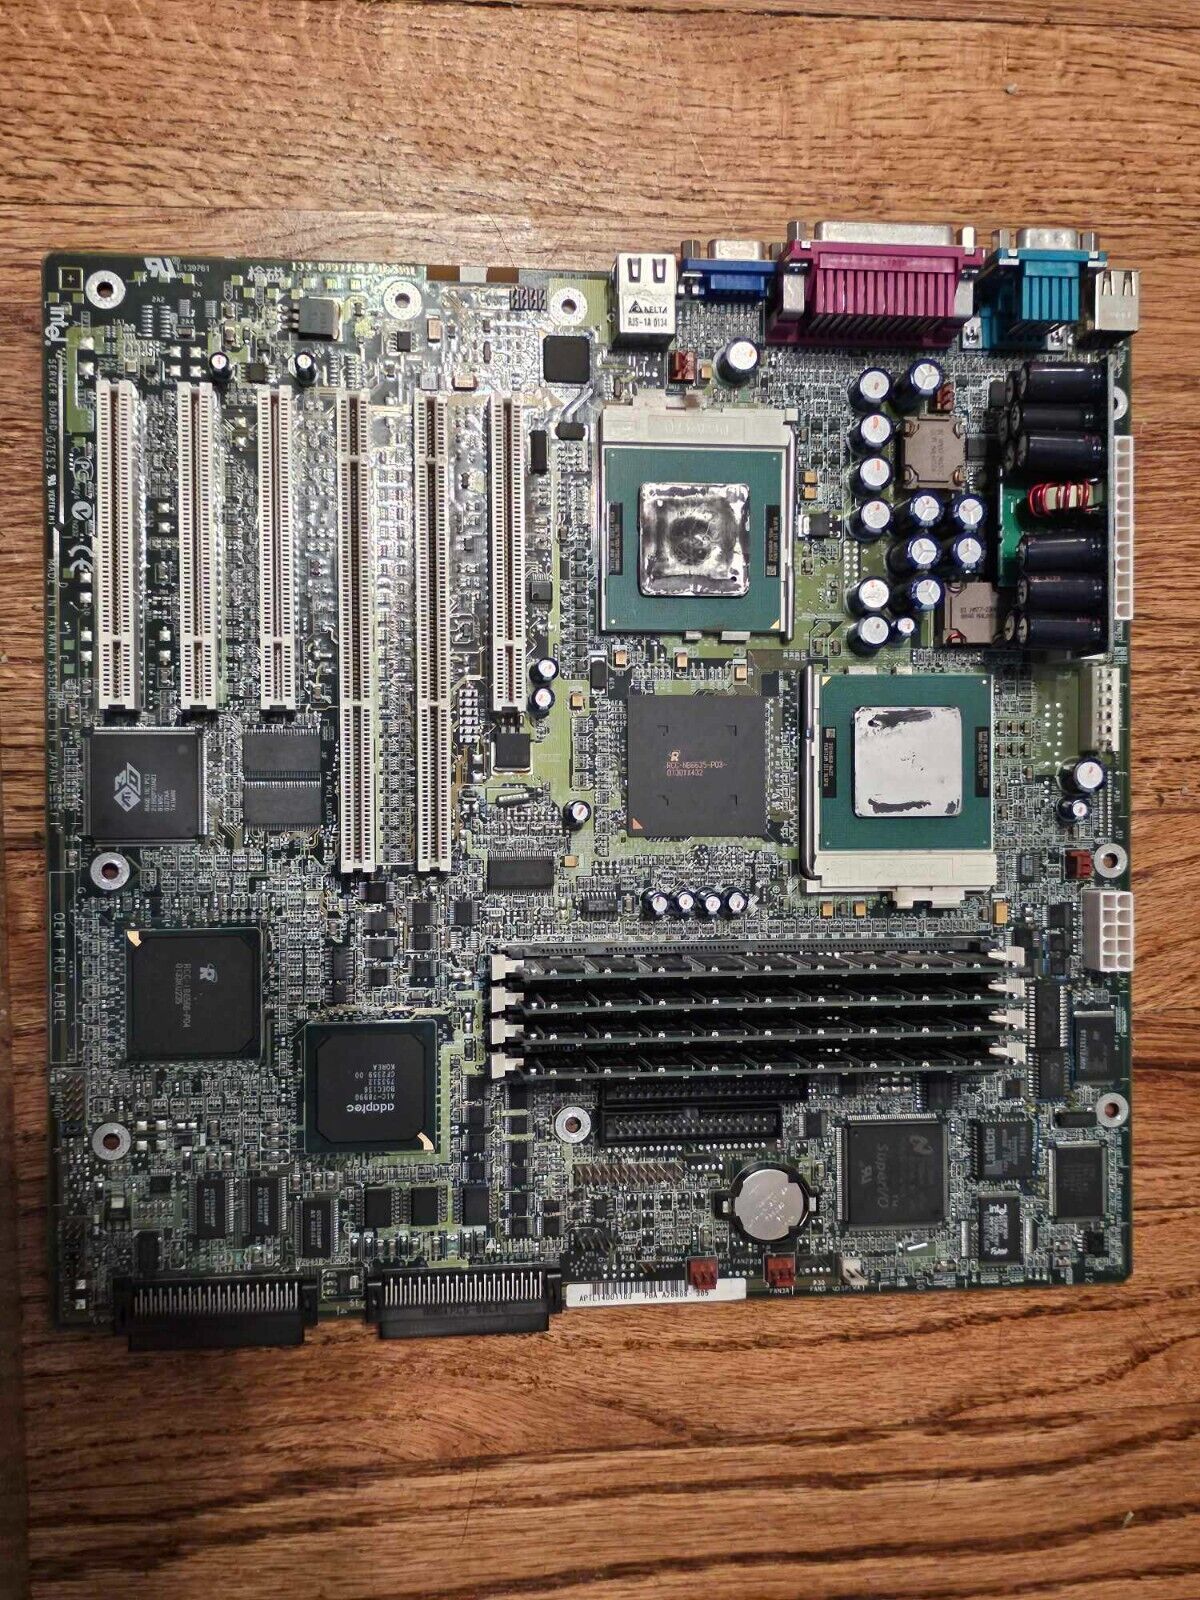 Intel 370 Motherboard Server Board G7ESZ Dual 1 GHz Pentium III 1GB RAM VertexM1